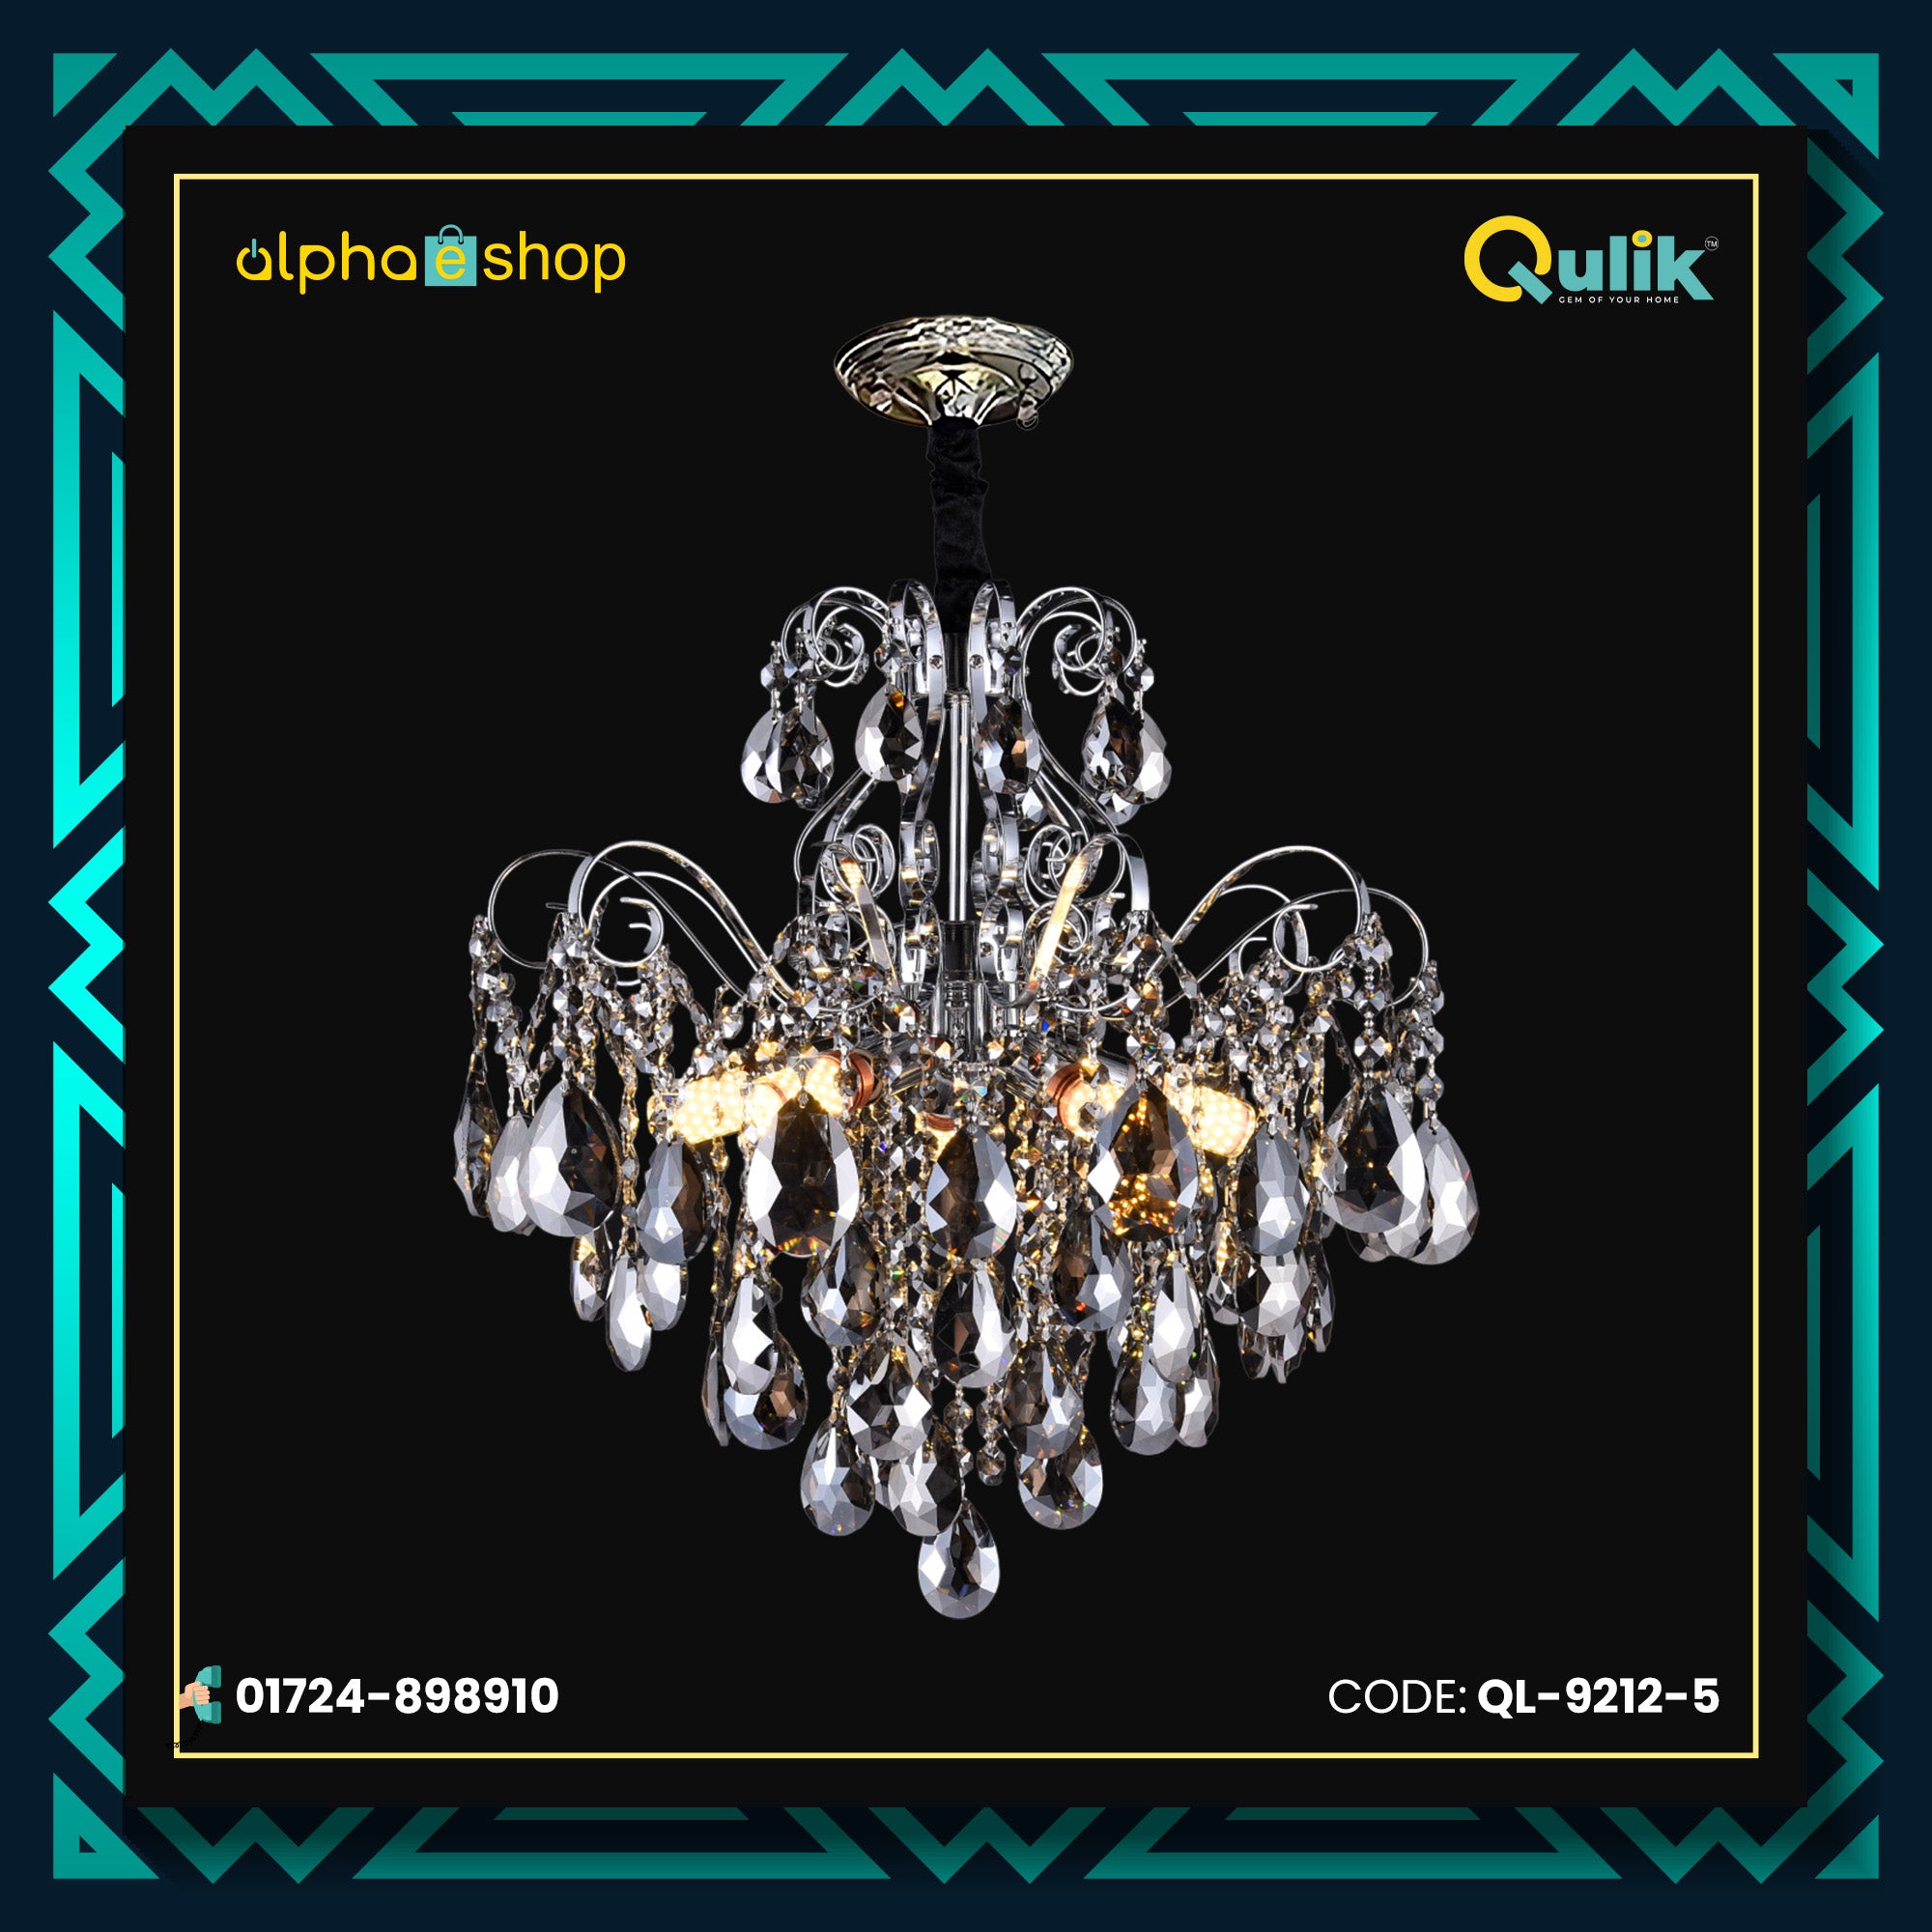 Qulik 9212-5 5 Light Ceiling Pendant in Polished Chrome with Crystal Decoration - LED, Adjustable Chain, Modern Design